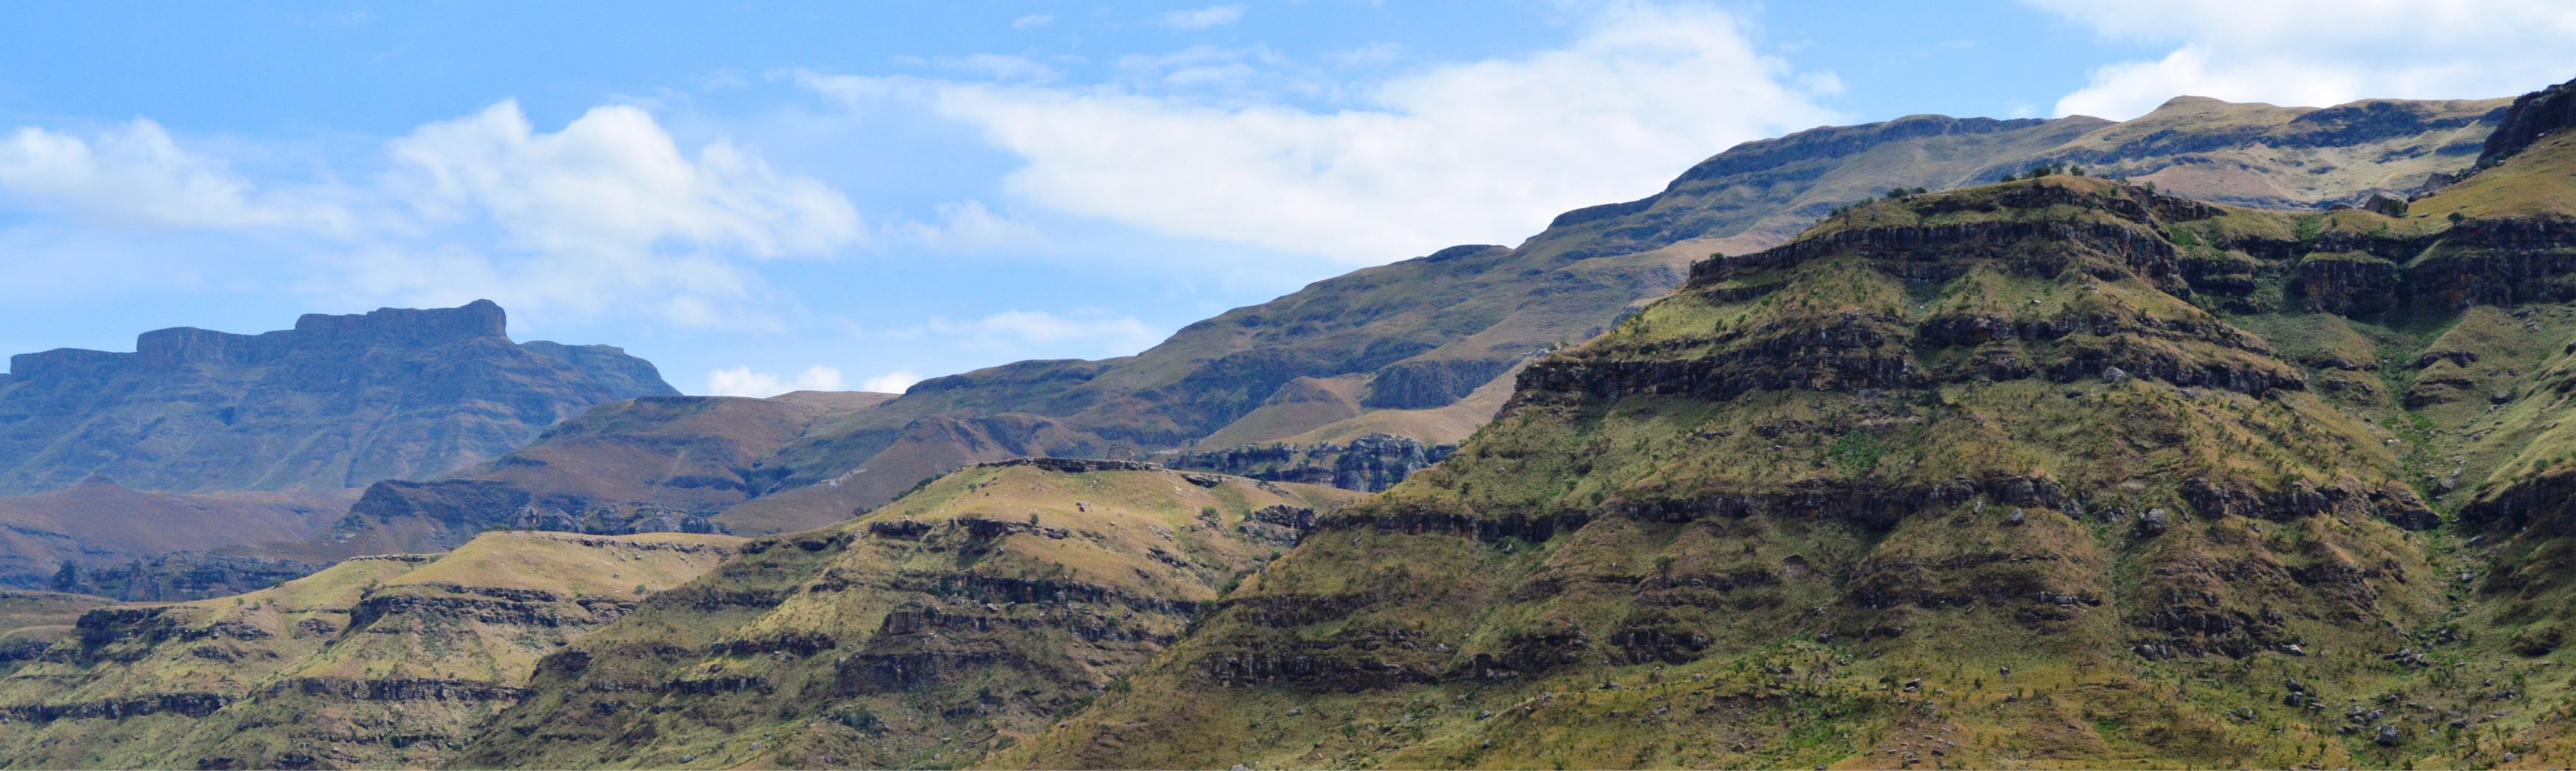 Тур в Лесото